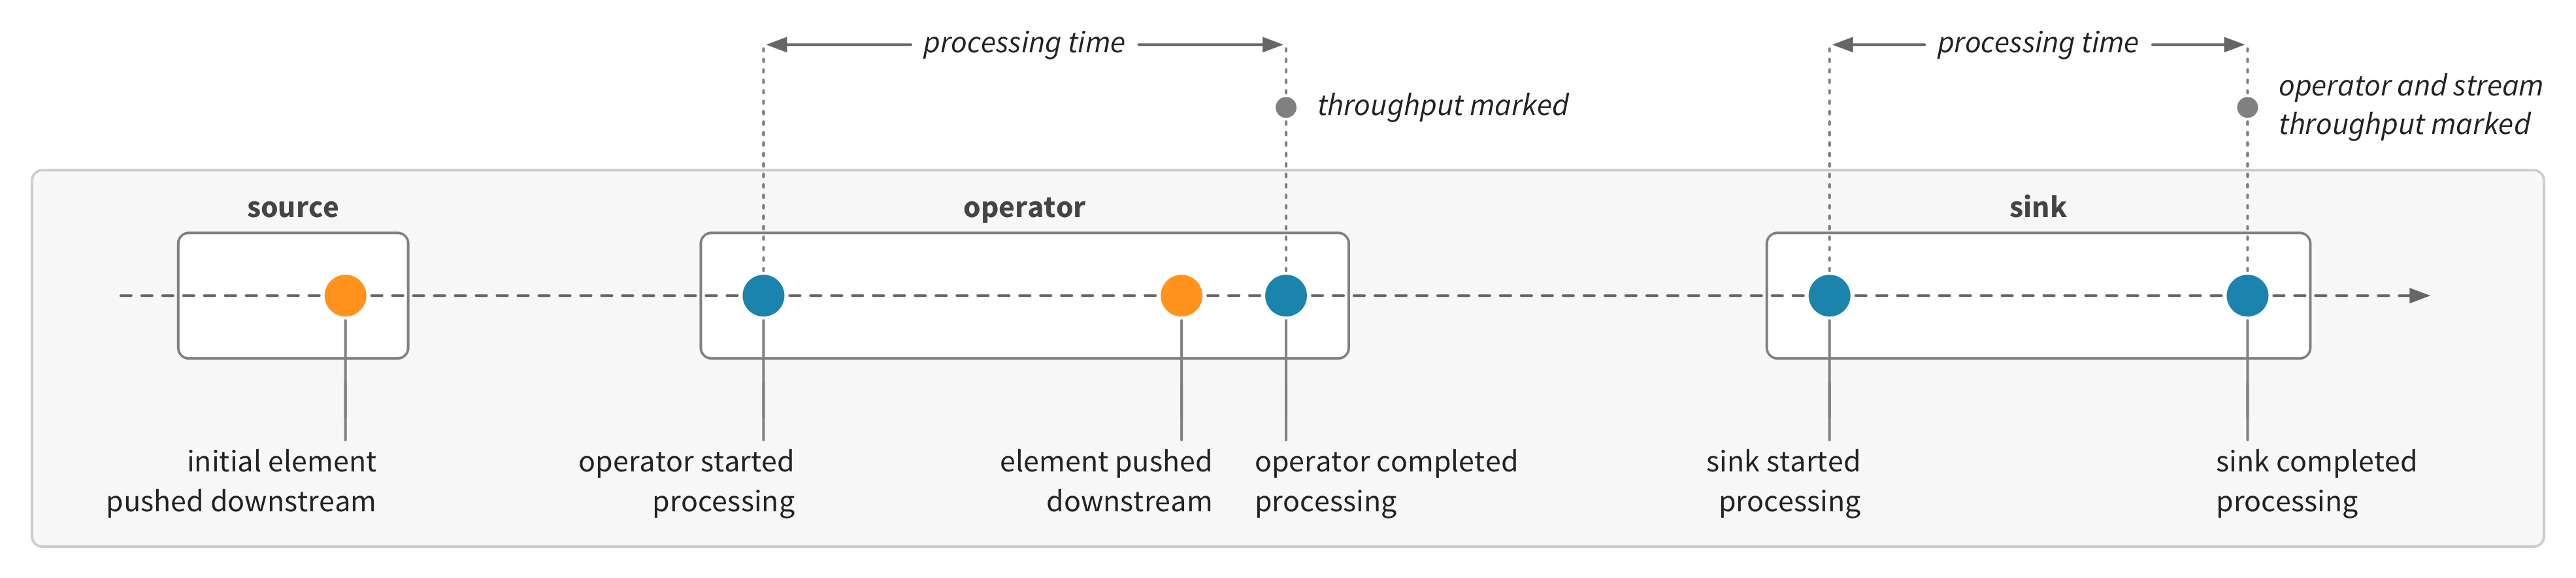 Throughput and processing time metrics